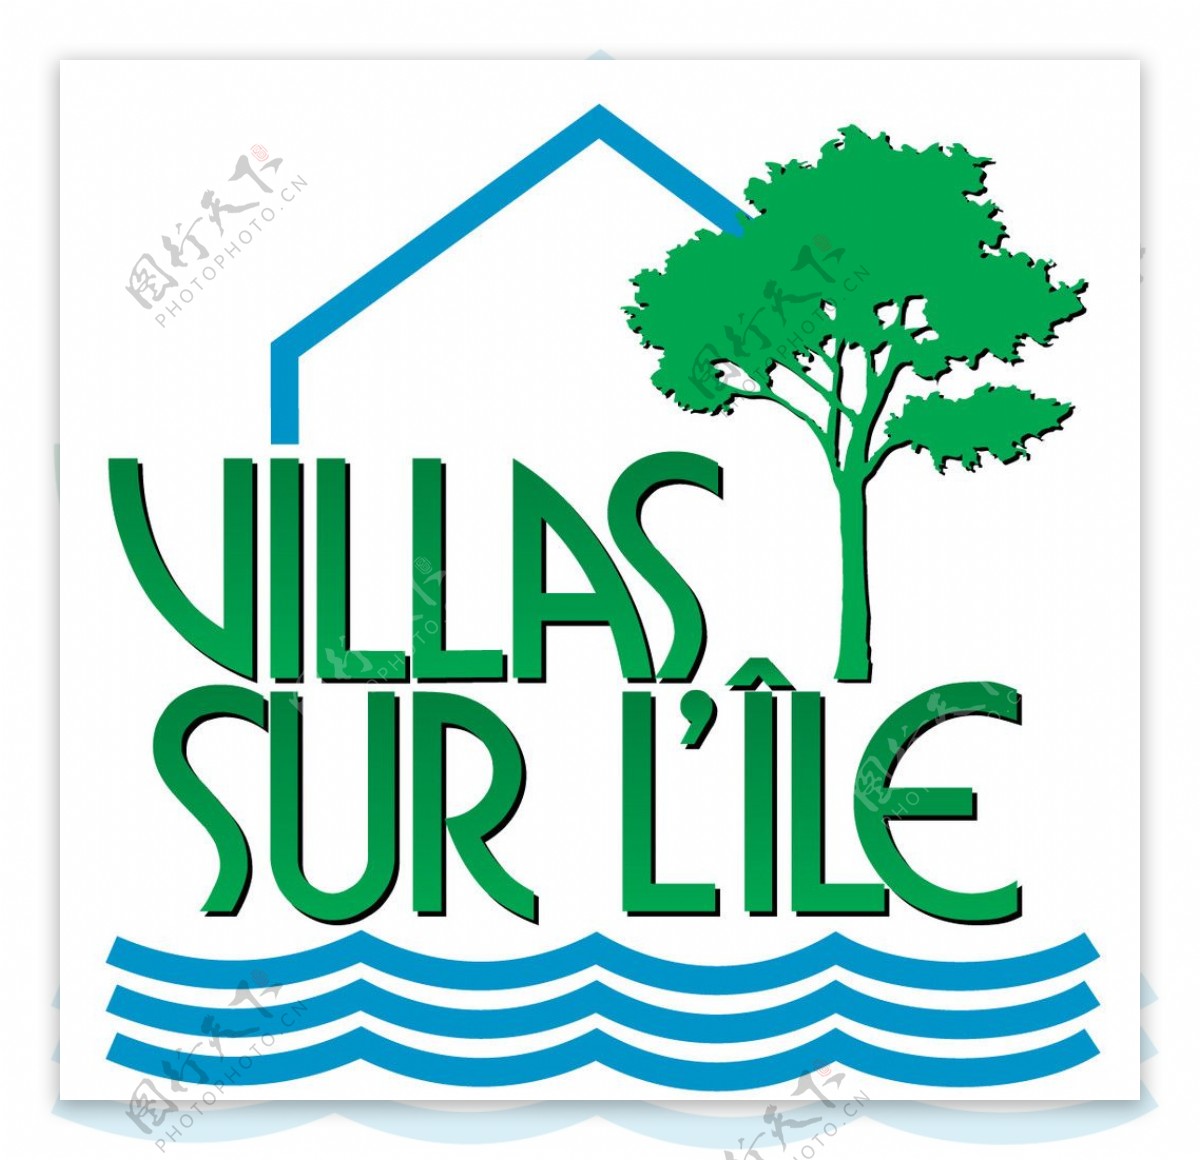 VillasSurIle标志图片